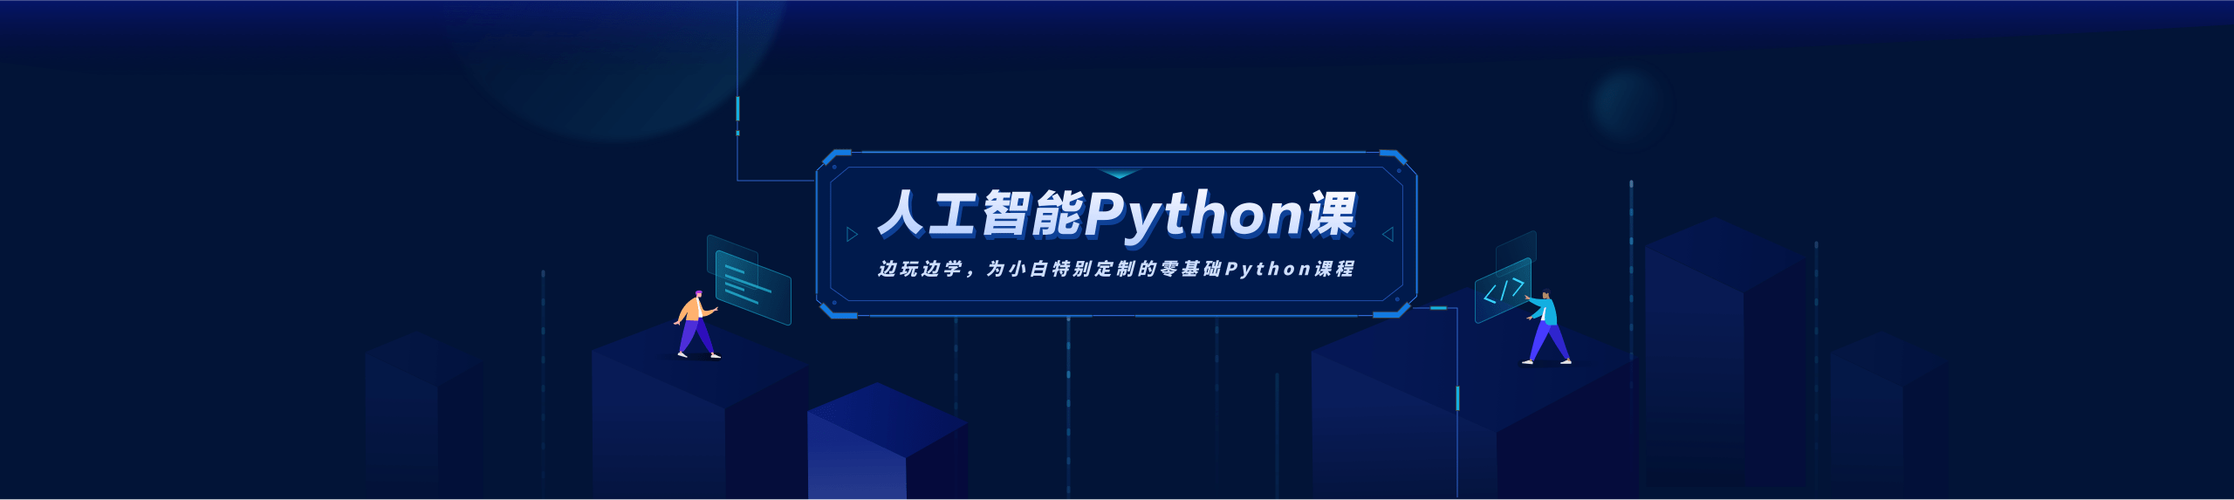 python爬虫实战教程人工智能课程培训